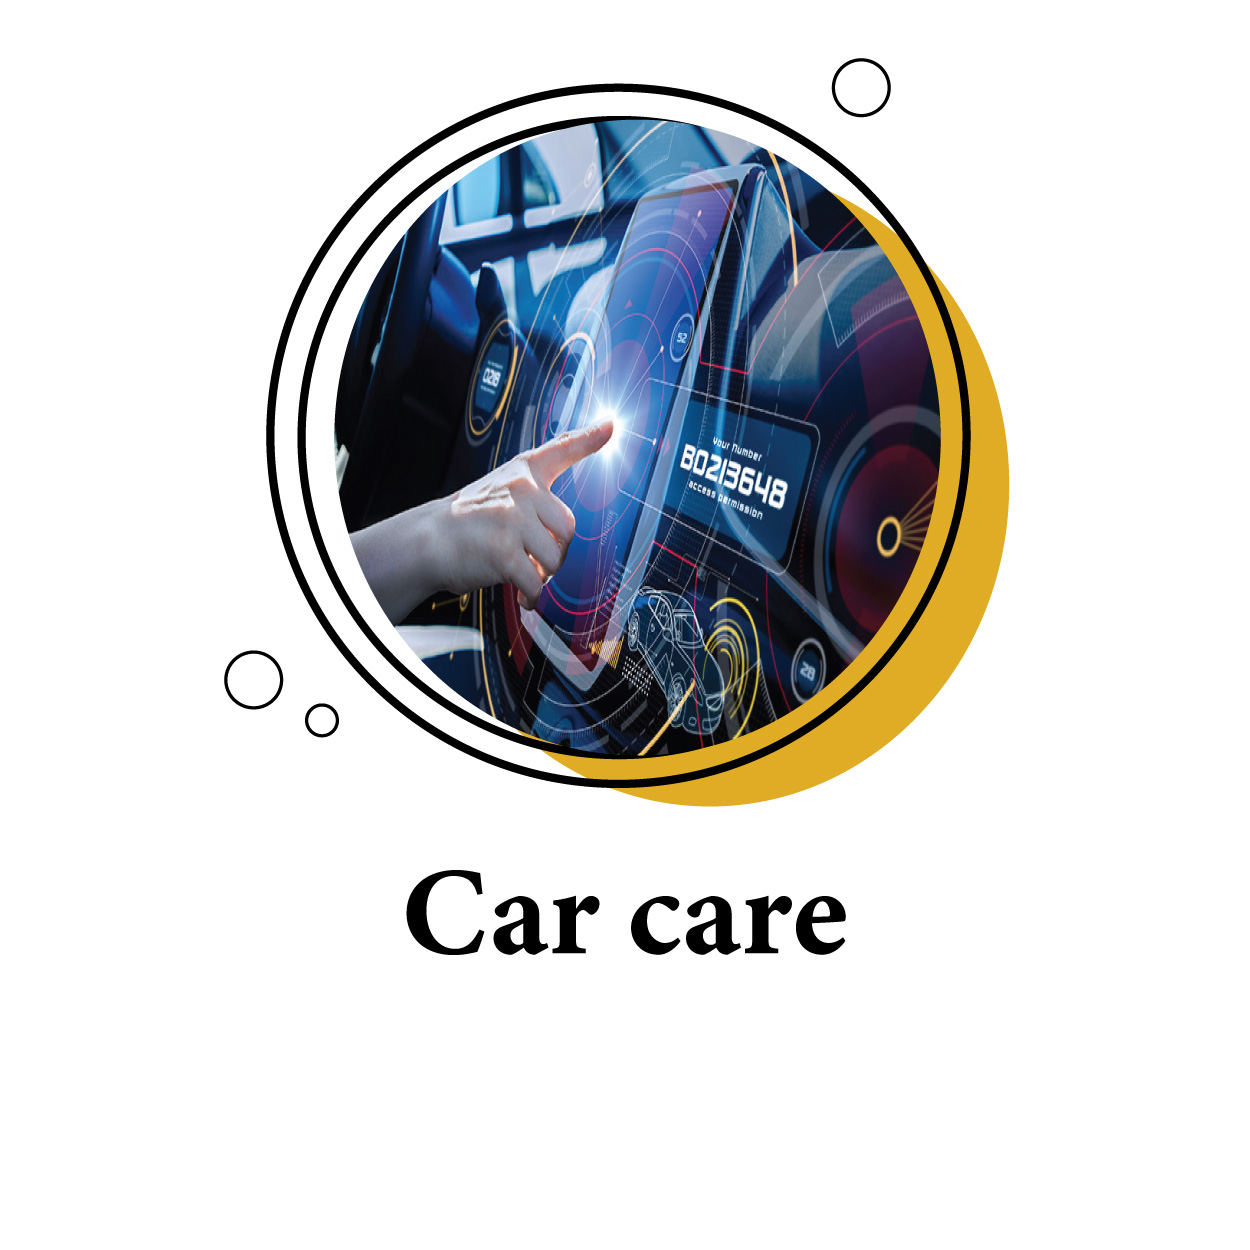 Car care